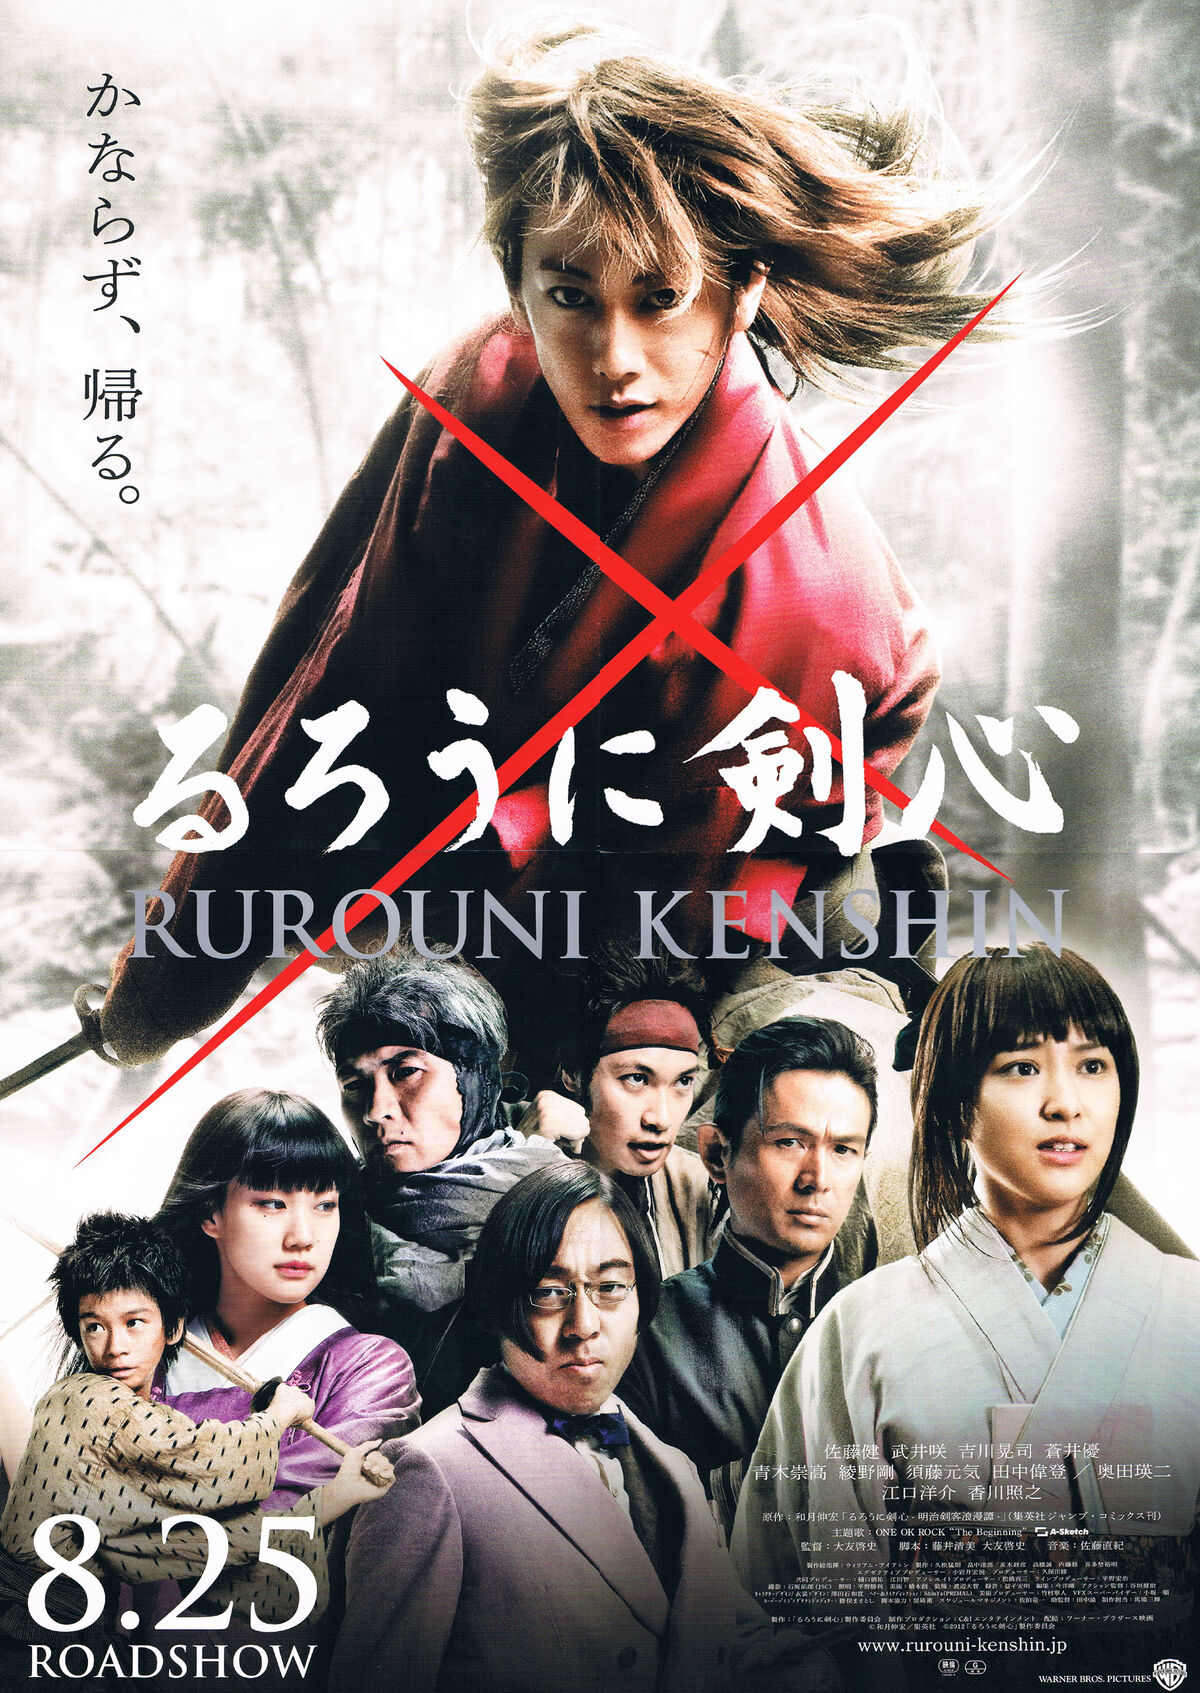 Kenshin Himura katana from Rurouni Kenshin anime 4K wallpaper download